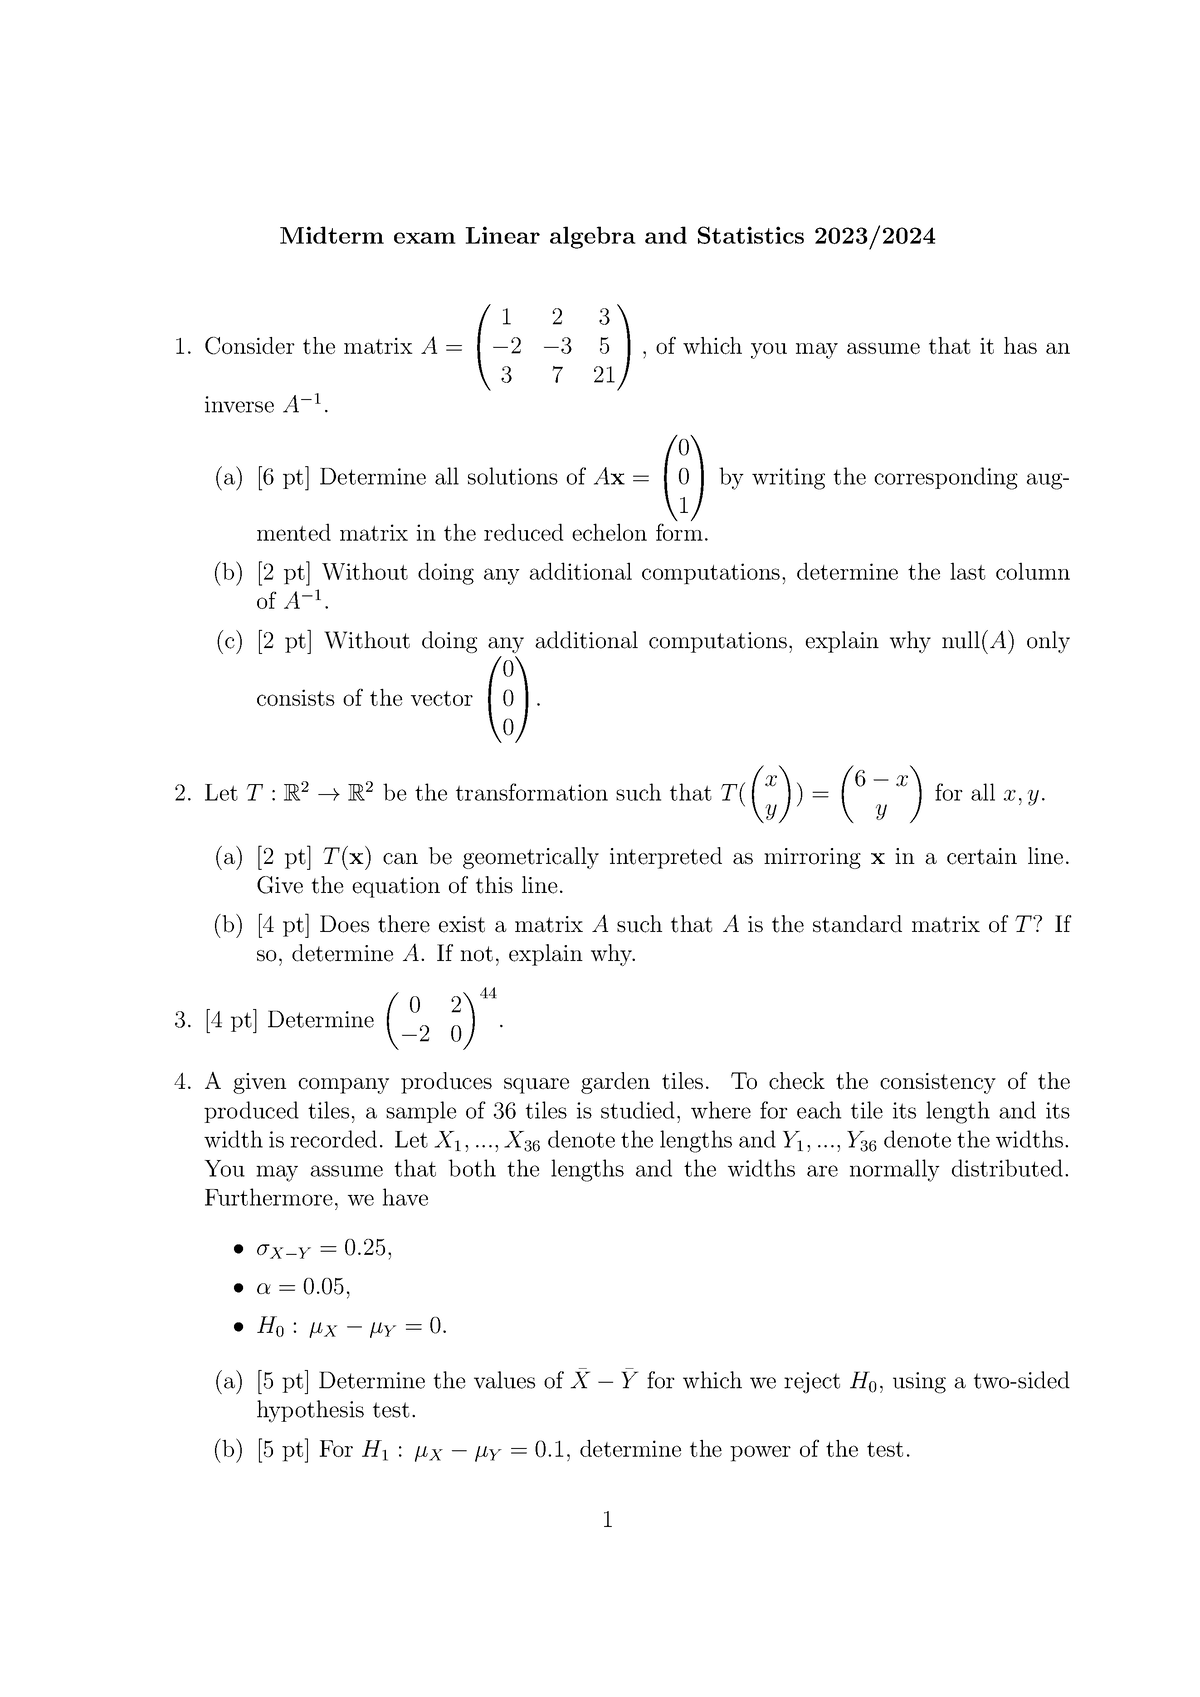 Midterm 6A6X0 20232024 Midterm exam Linear algebra and Statistics